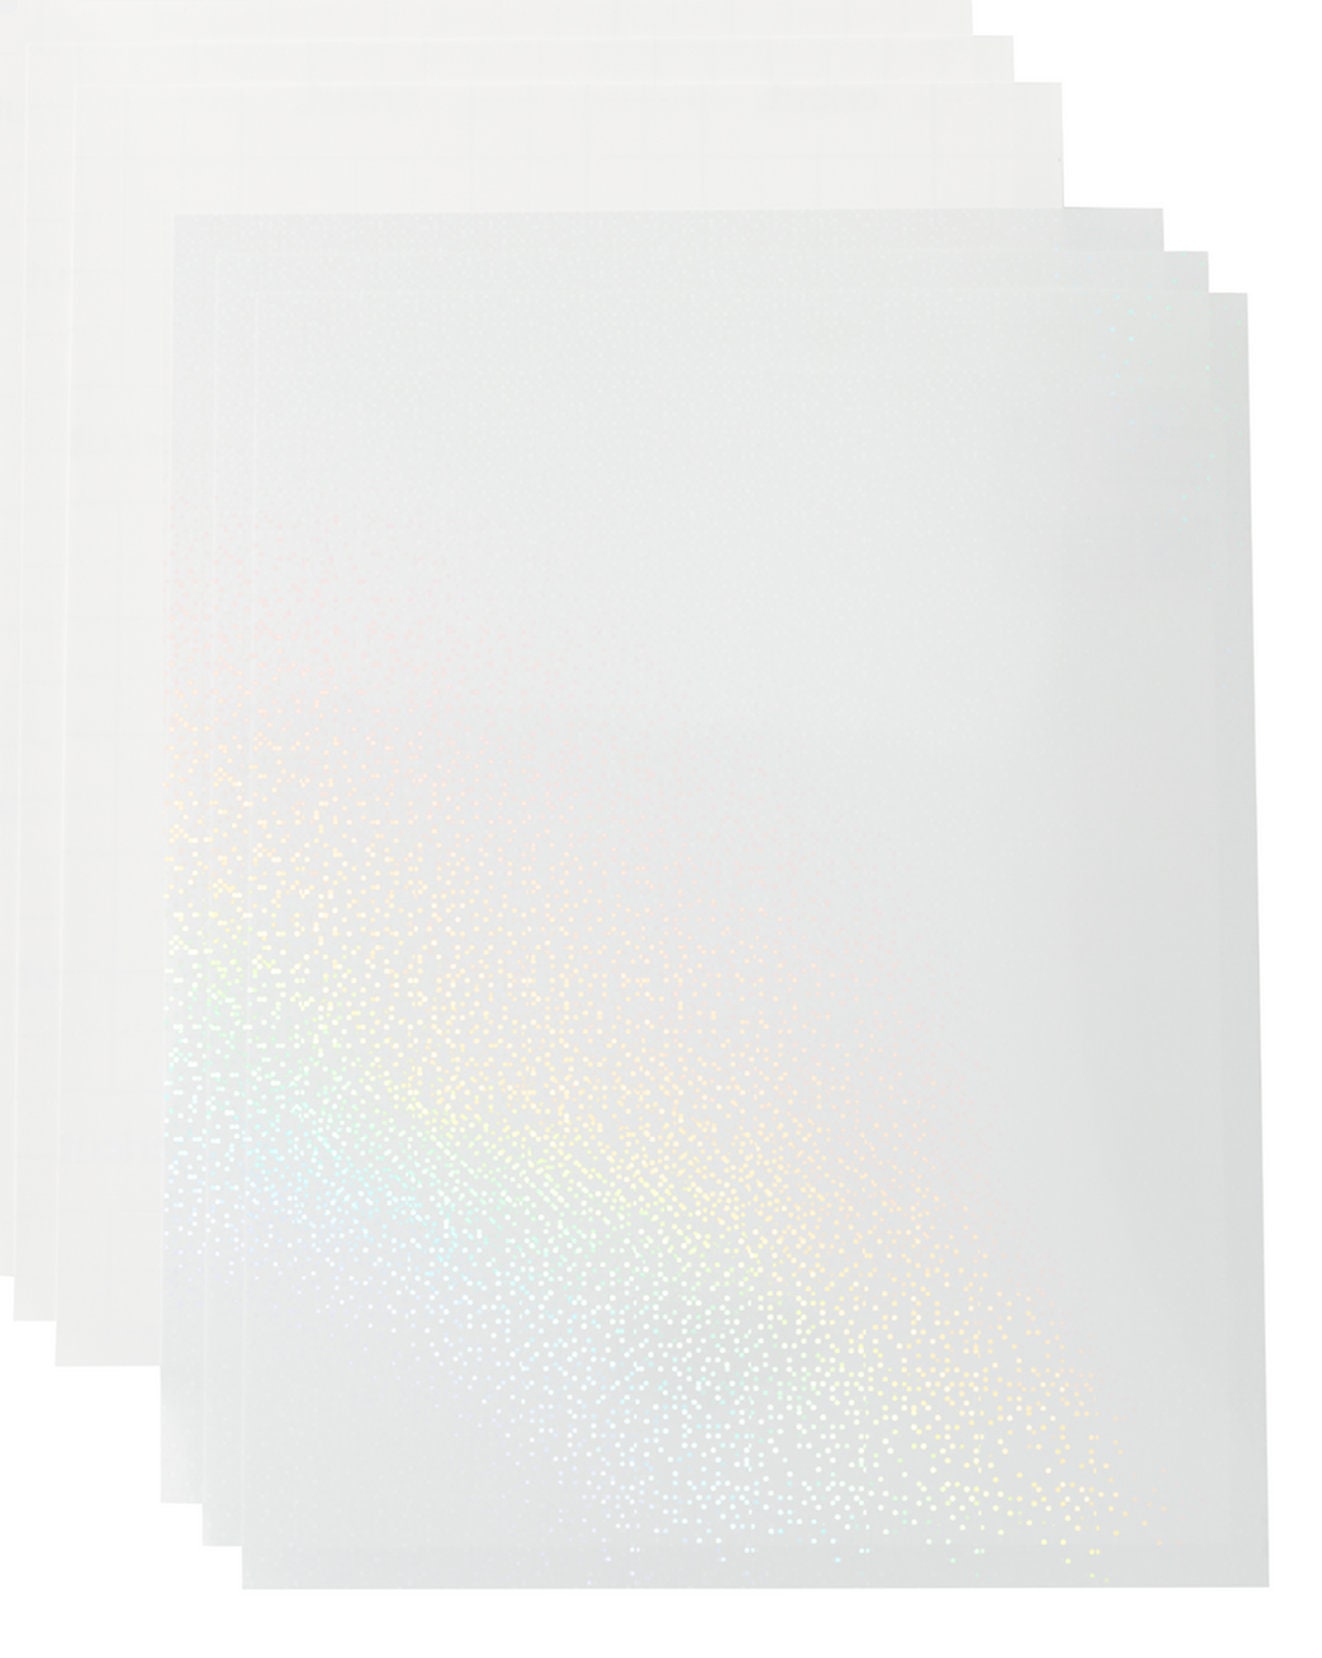 INKJET PRINTER Gold or Silver Foil Decal Paper. Shiny Metallic Surface.  Self Adhesive Print Peel Backing & Stick 1 to 5 Sheet Pack 